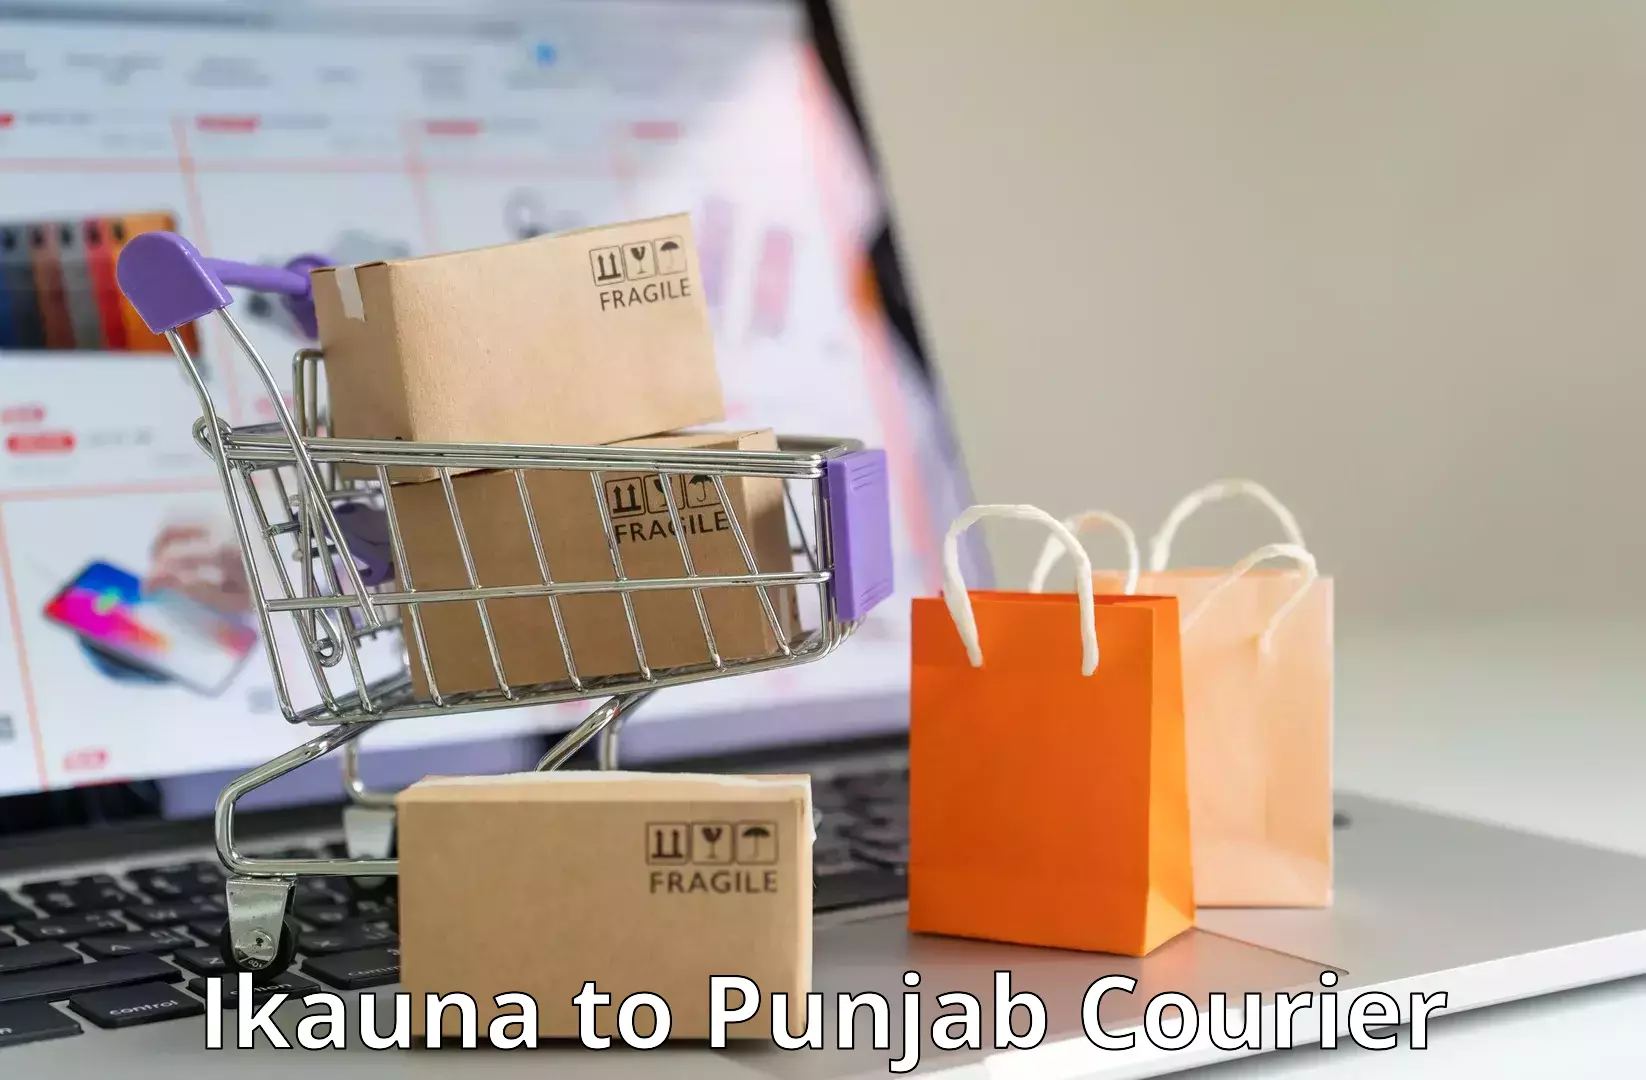 On-demand courier Ikauna to Punjab